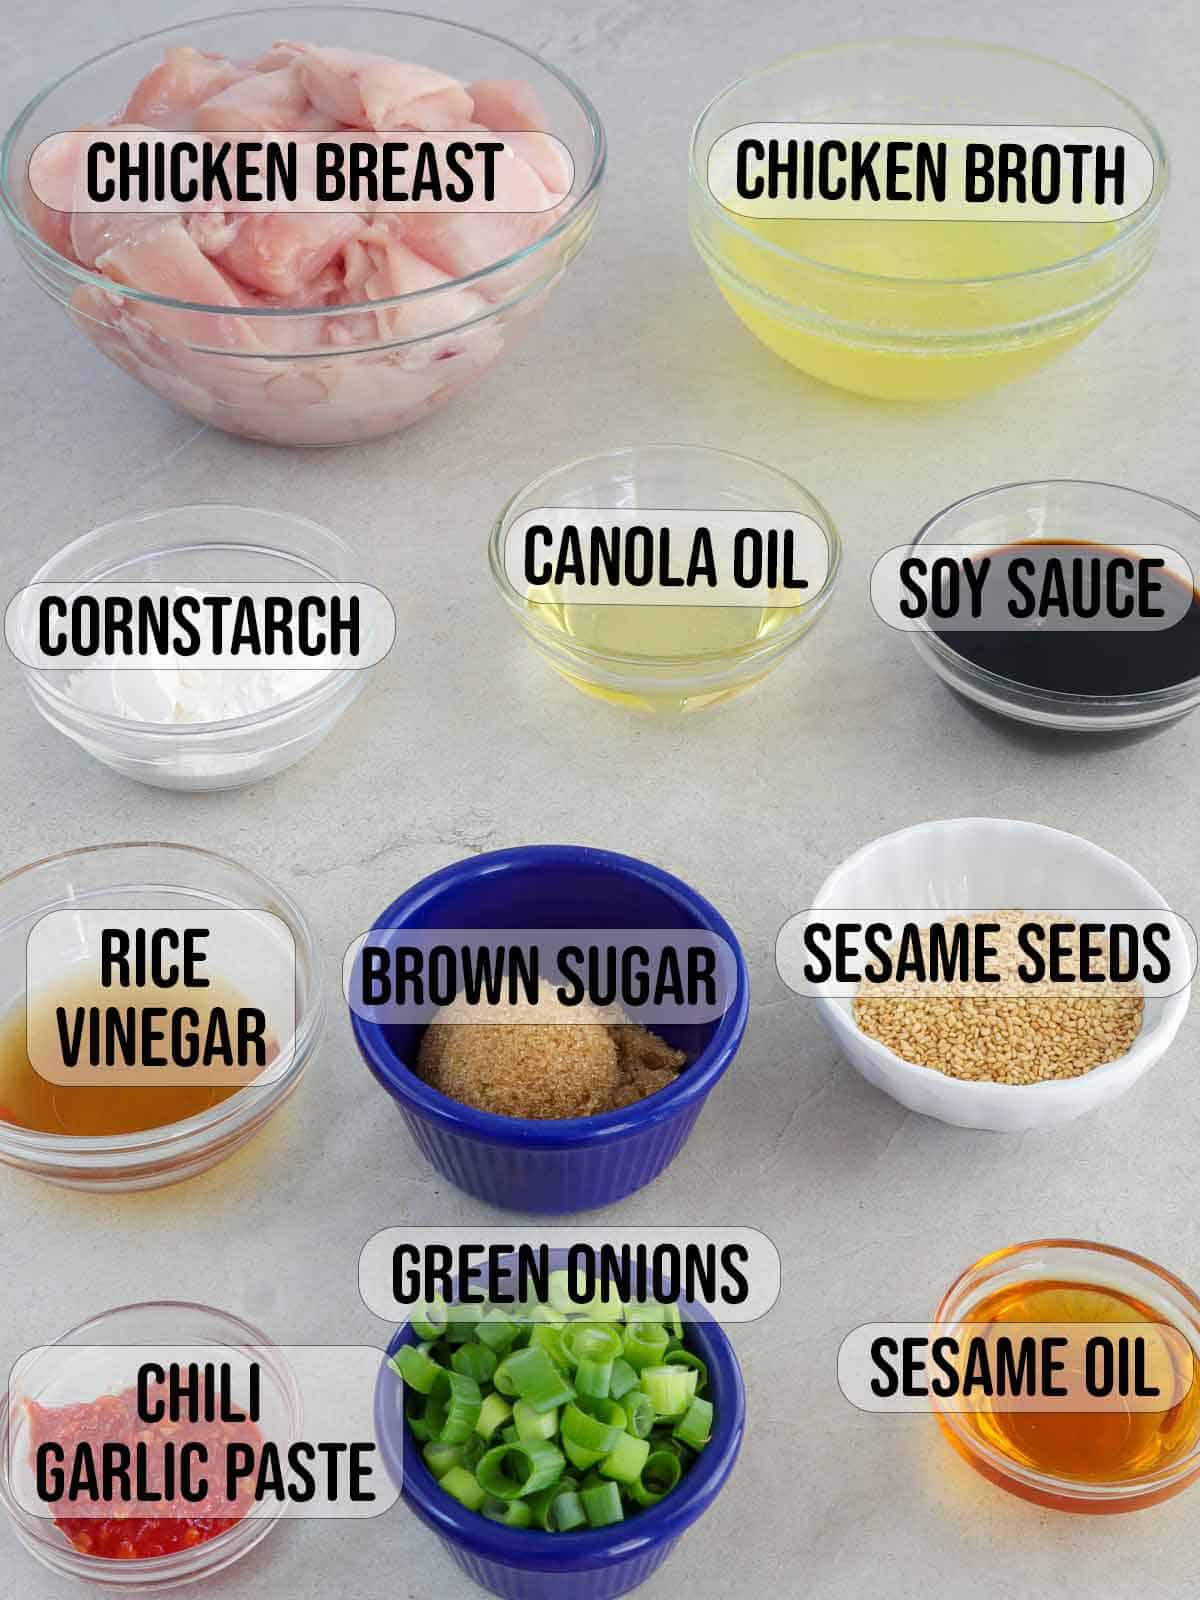 chicken breast, rice vinegar, oil soy sauce, broth, brown sugar, sesame oil, sesame seeds, green onions, chili garlic paste in bowls.